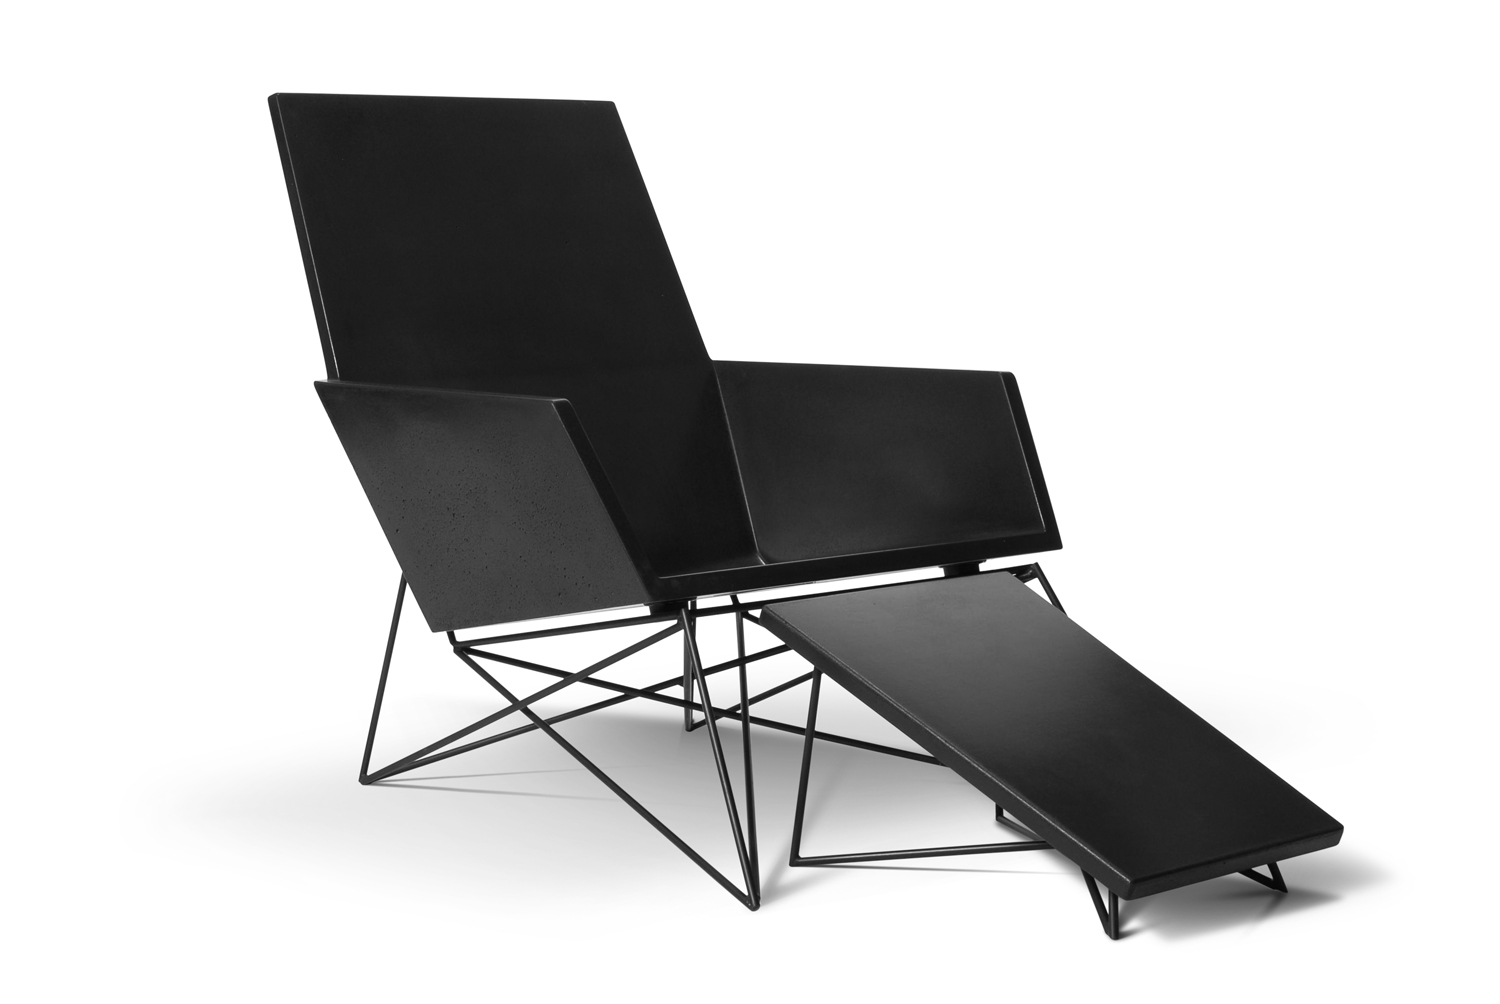 Hard Goods Concrete and Steel Modern Muskoka Chair